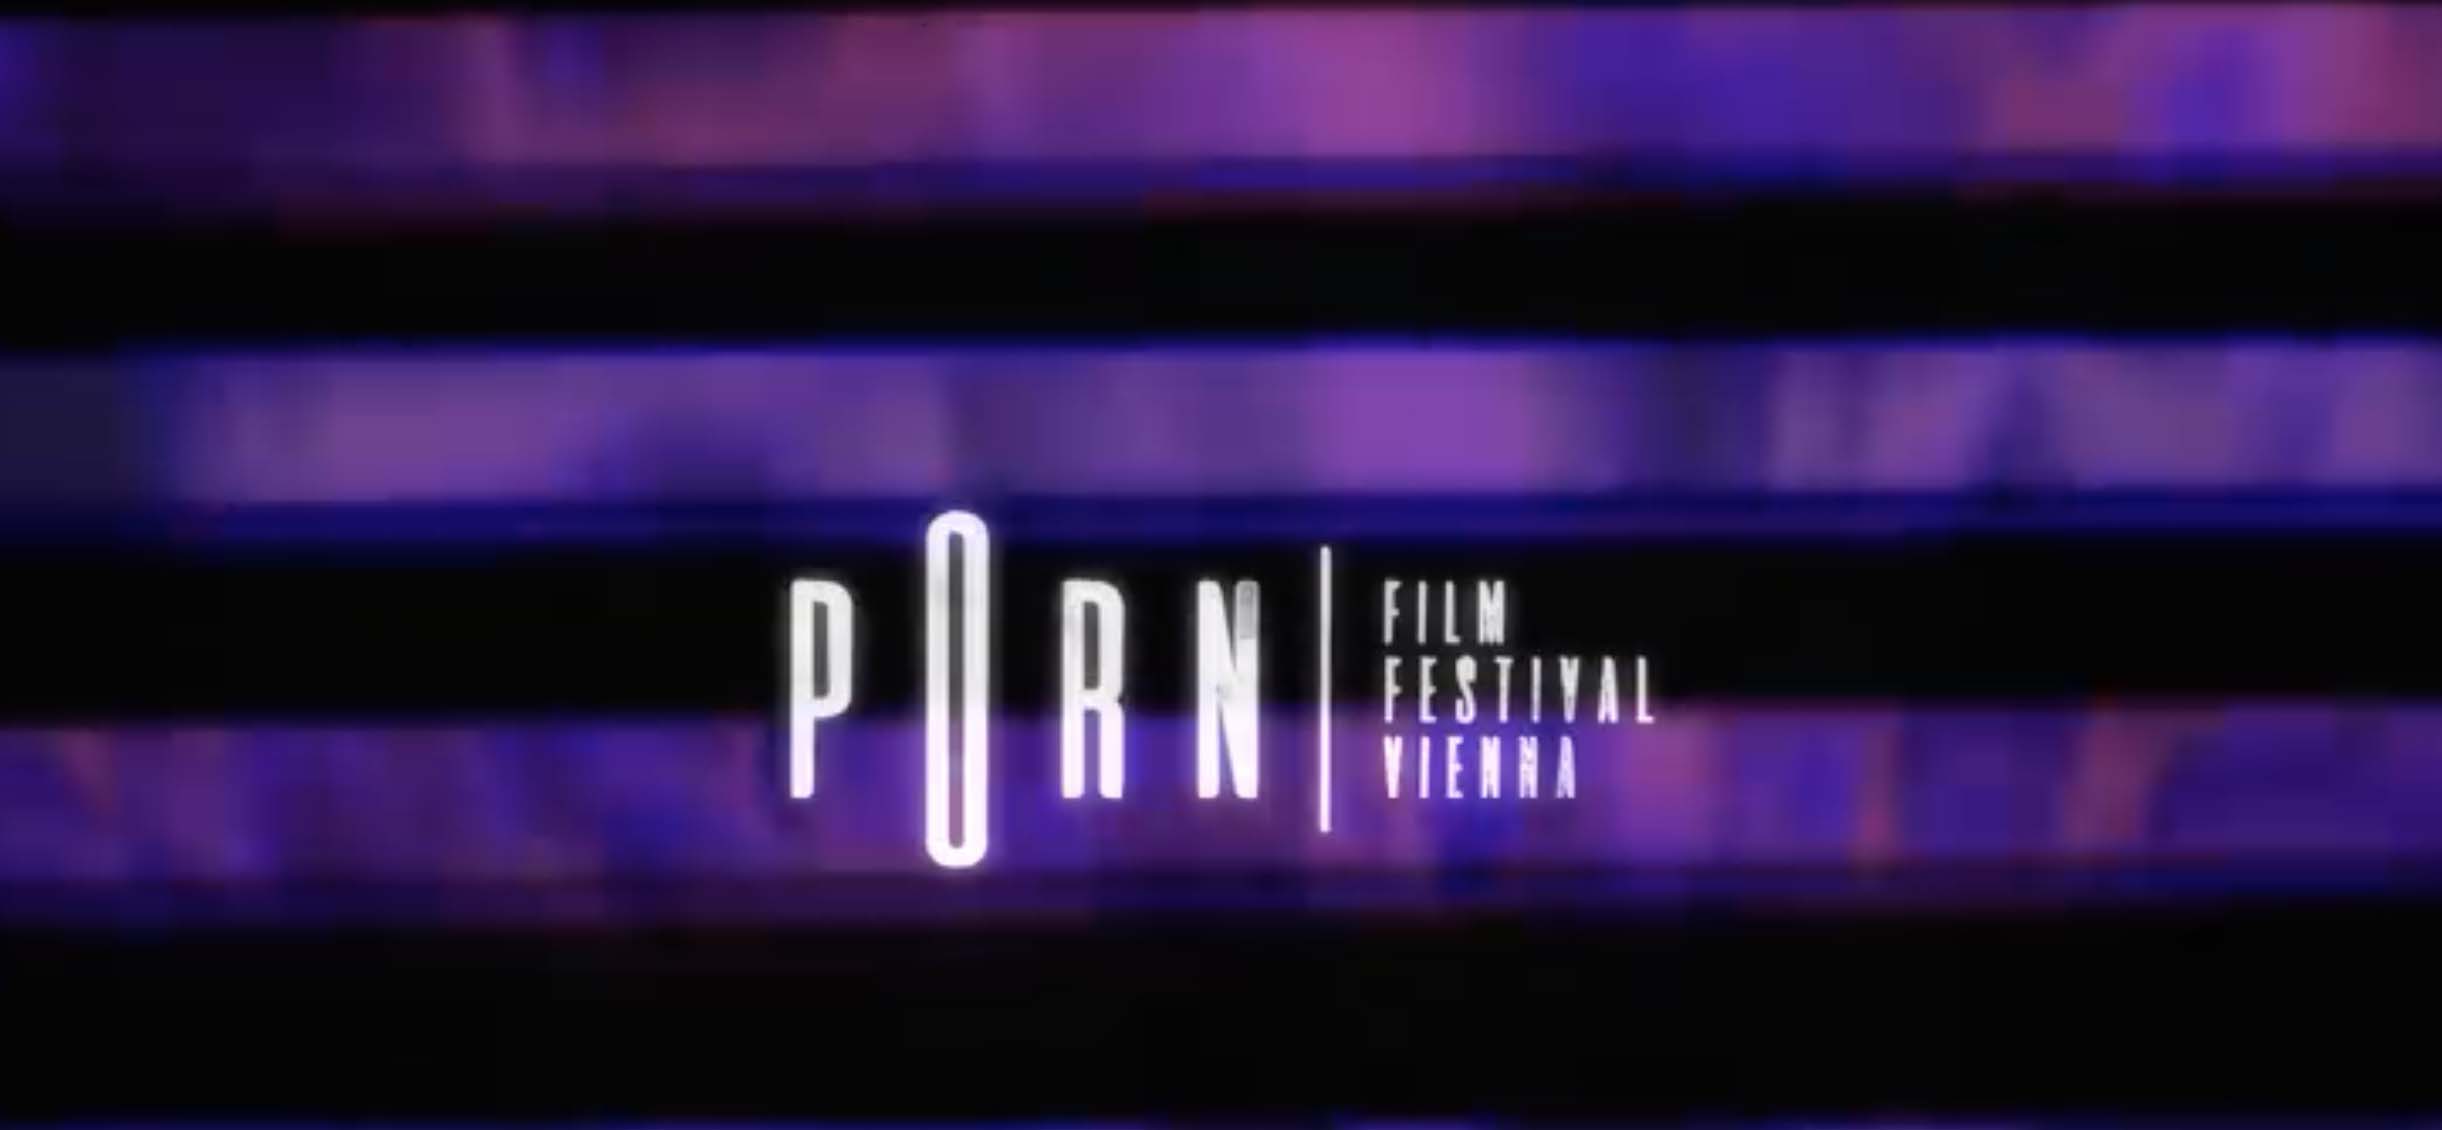 2442px x 1130px - Porn Film Festival Vienna 2019 - Vienna WÃ¼rstelstand